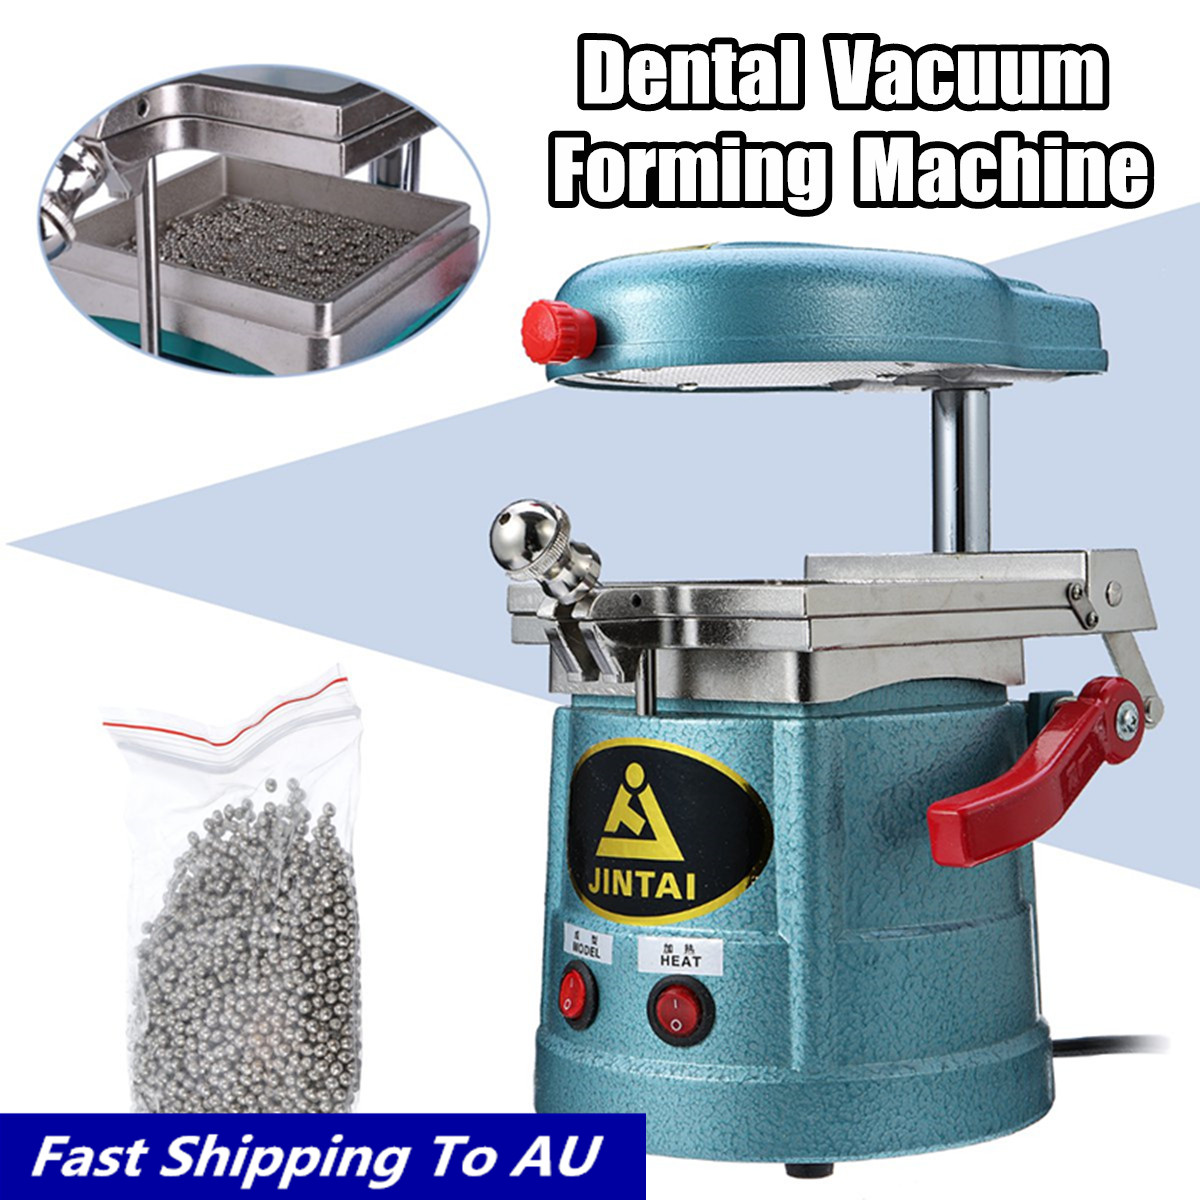 220V 50Hz JT-18 Heat Thermoforming Former Equipment Dental Vacuum Forming/Molding Machine Dental Tools